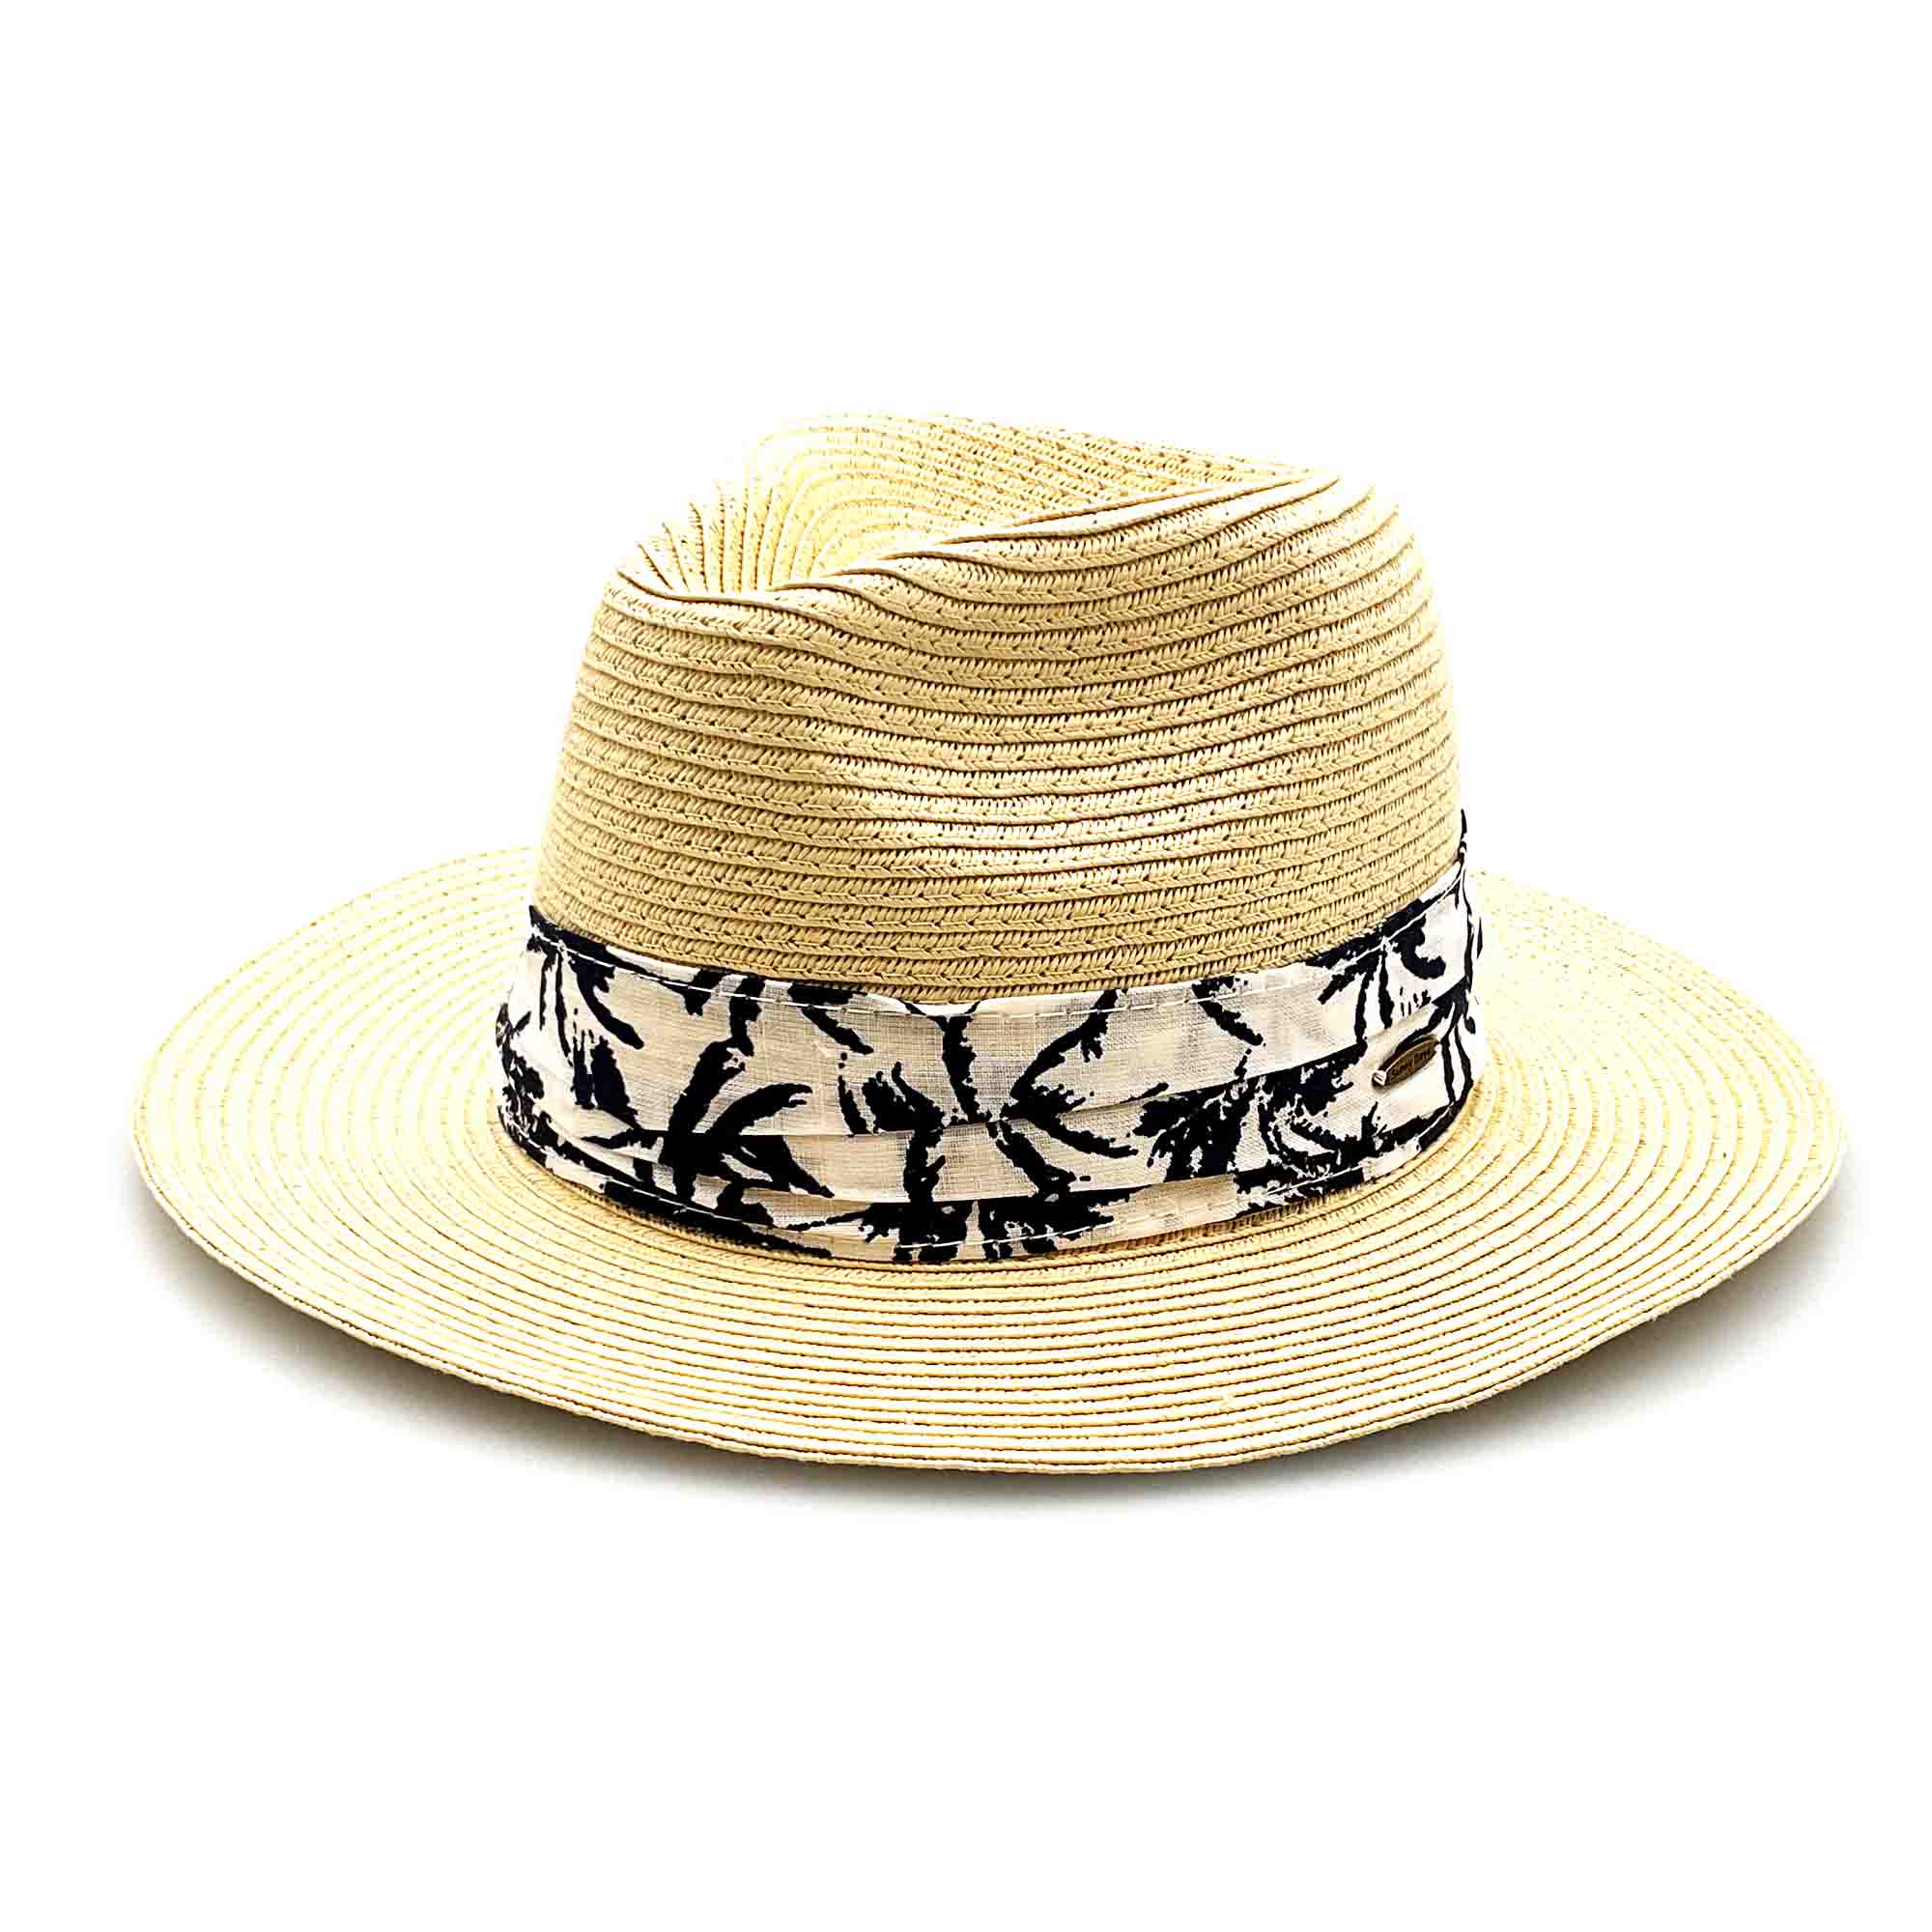 Small Size Fedora Hat with Palm Print Cotton Band - Sunny Dayz™ Safari Hat Sun N Sand Hats    